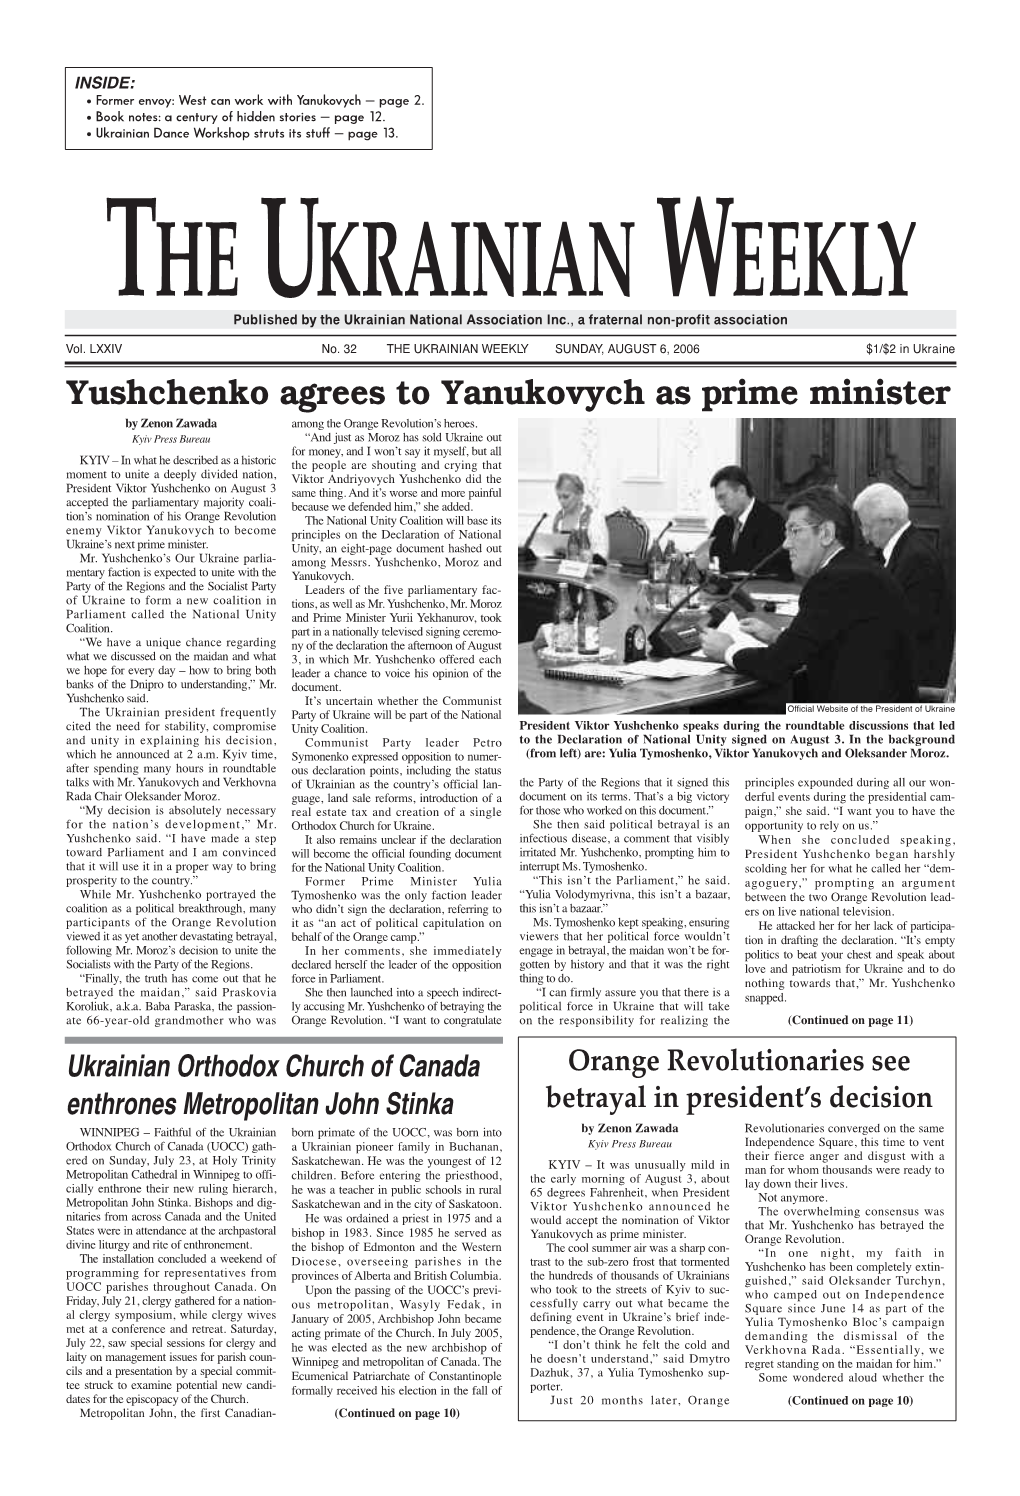 The Ukrainian Weekly 2006, No.32